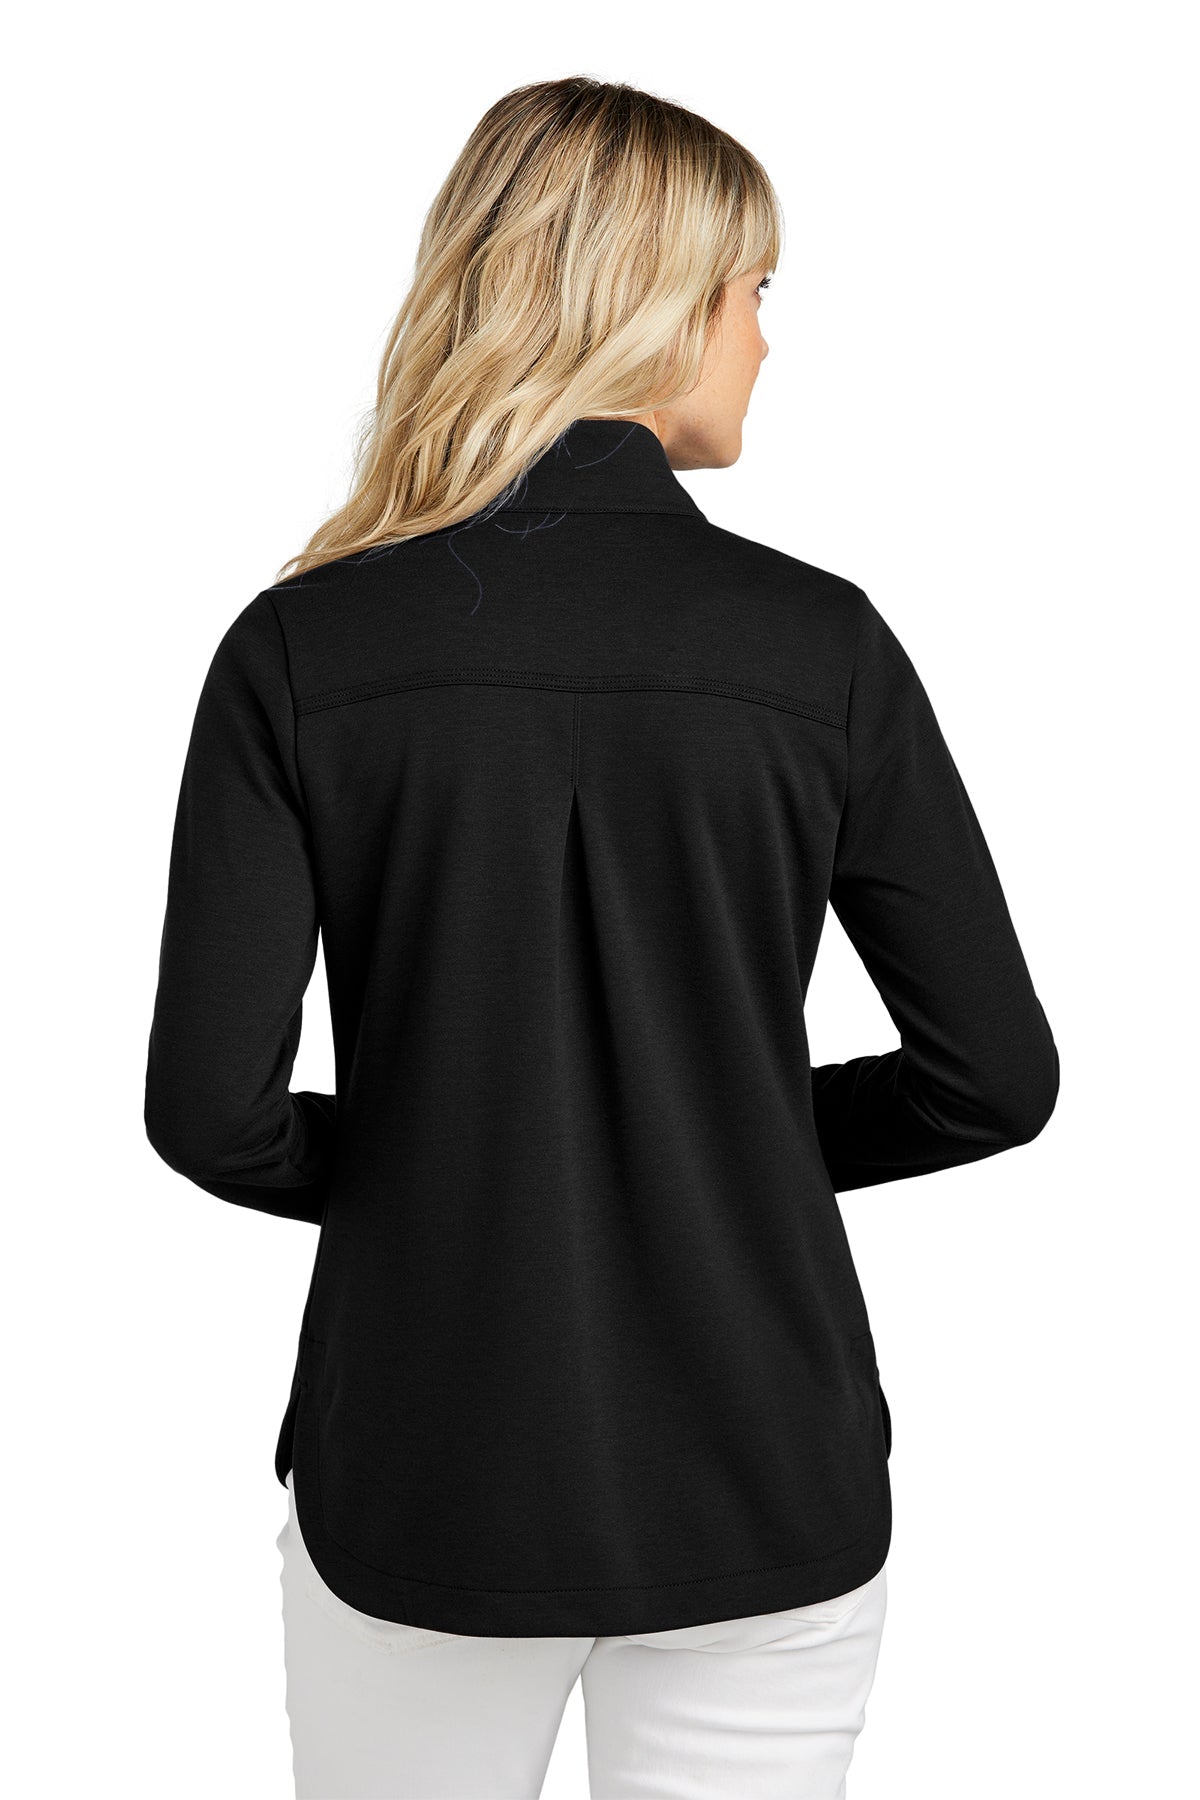 TravisMathew Ladies Coveside Custom Zip Sweatshirts, Black